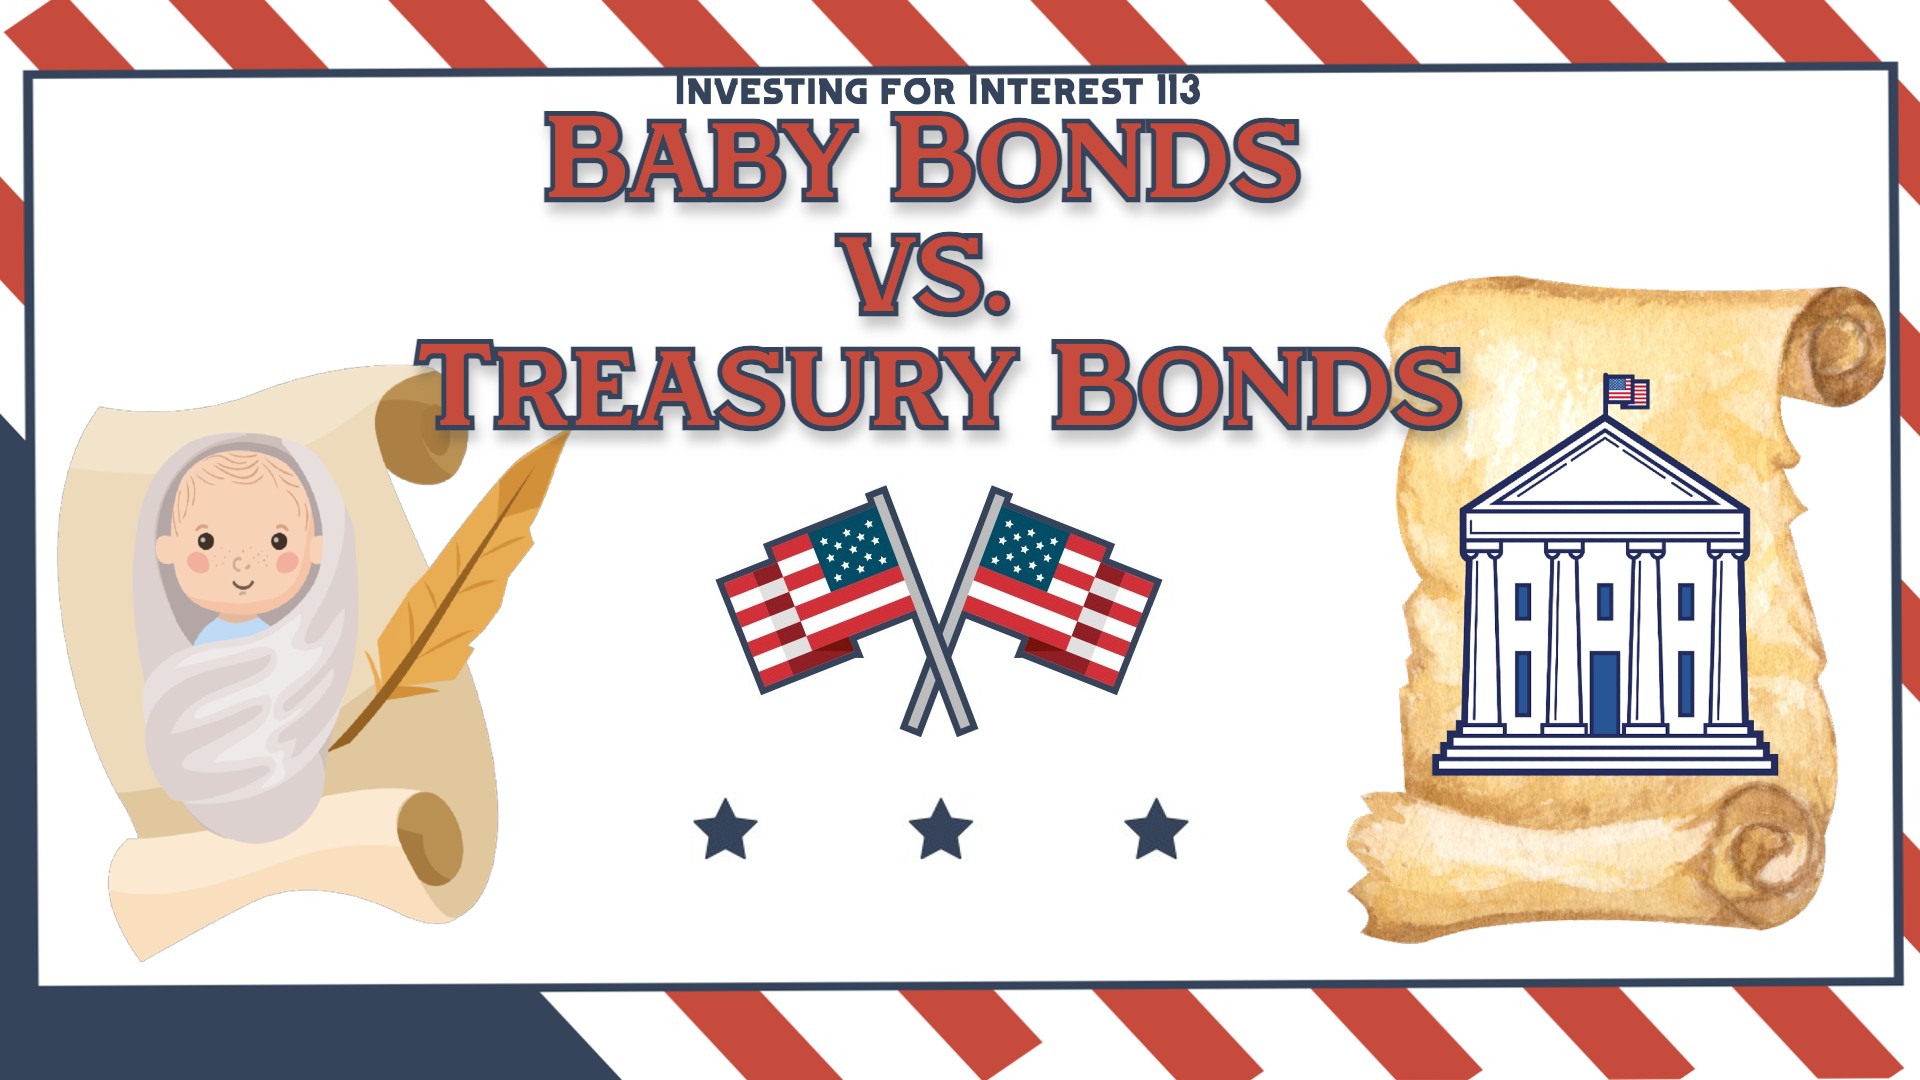 Investing for Interest 113: Baby Bonds vs. Treasury Bonds